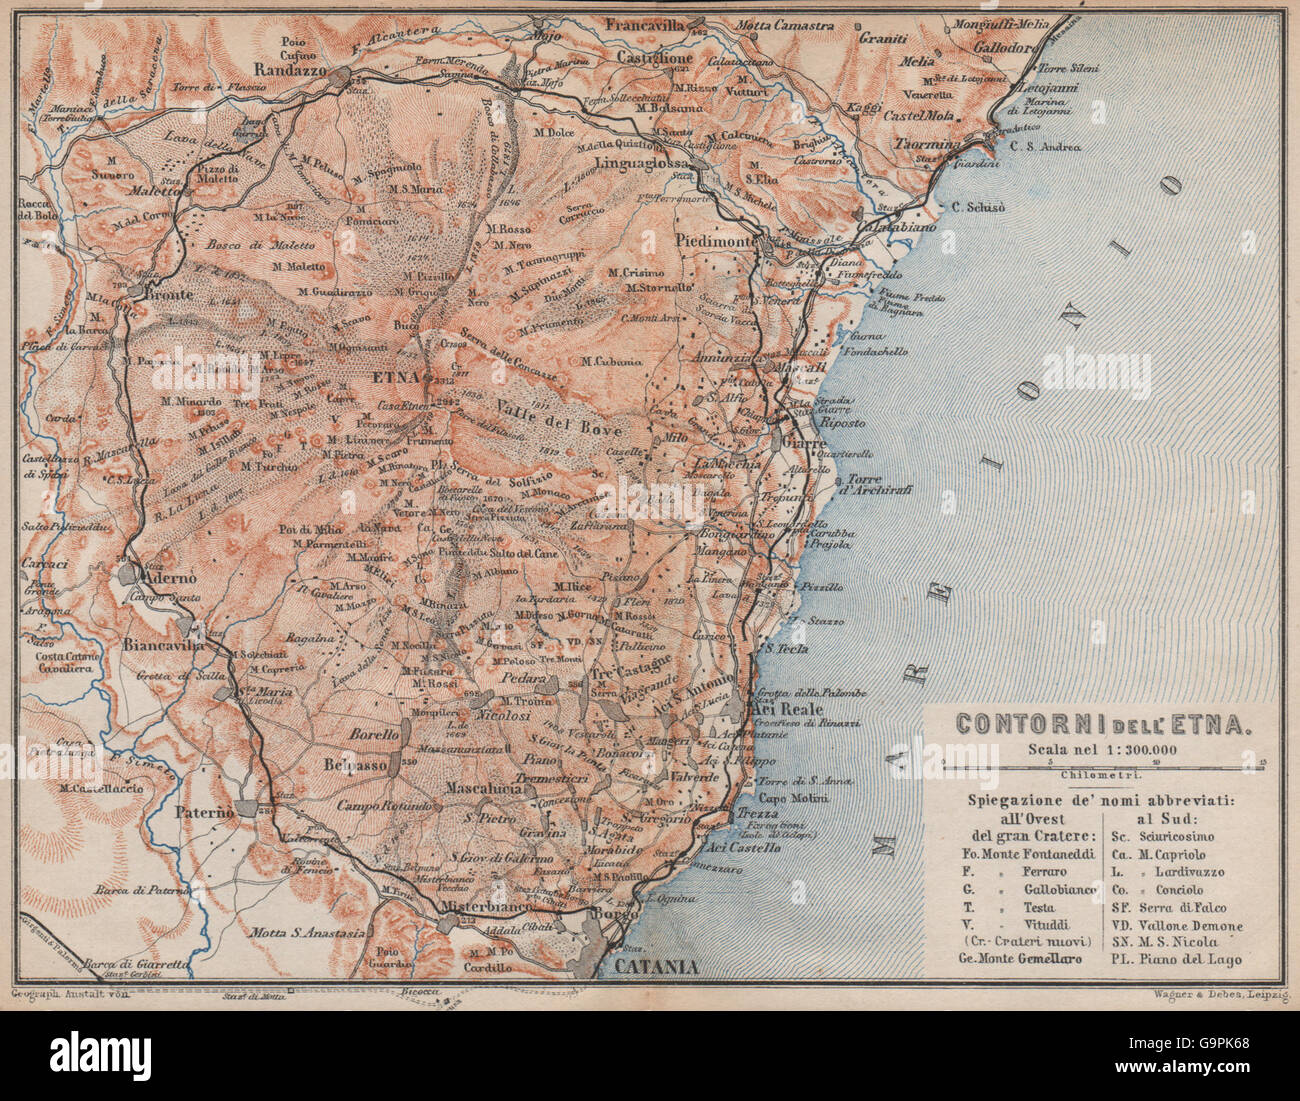 MOUNT ETNA environs/contorni. Catania Giarre Acireale. Sicily Sicilia, 1896 map Stock Photo